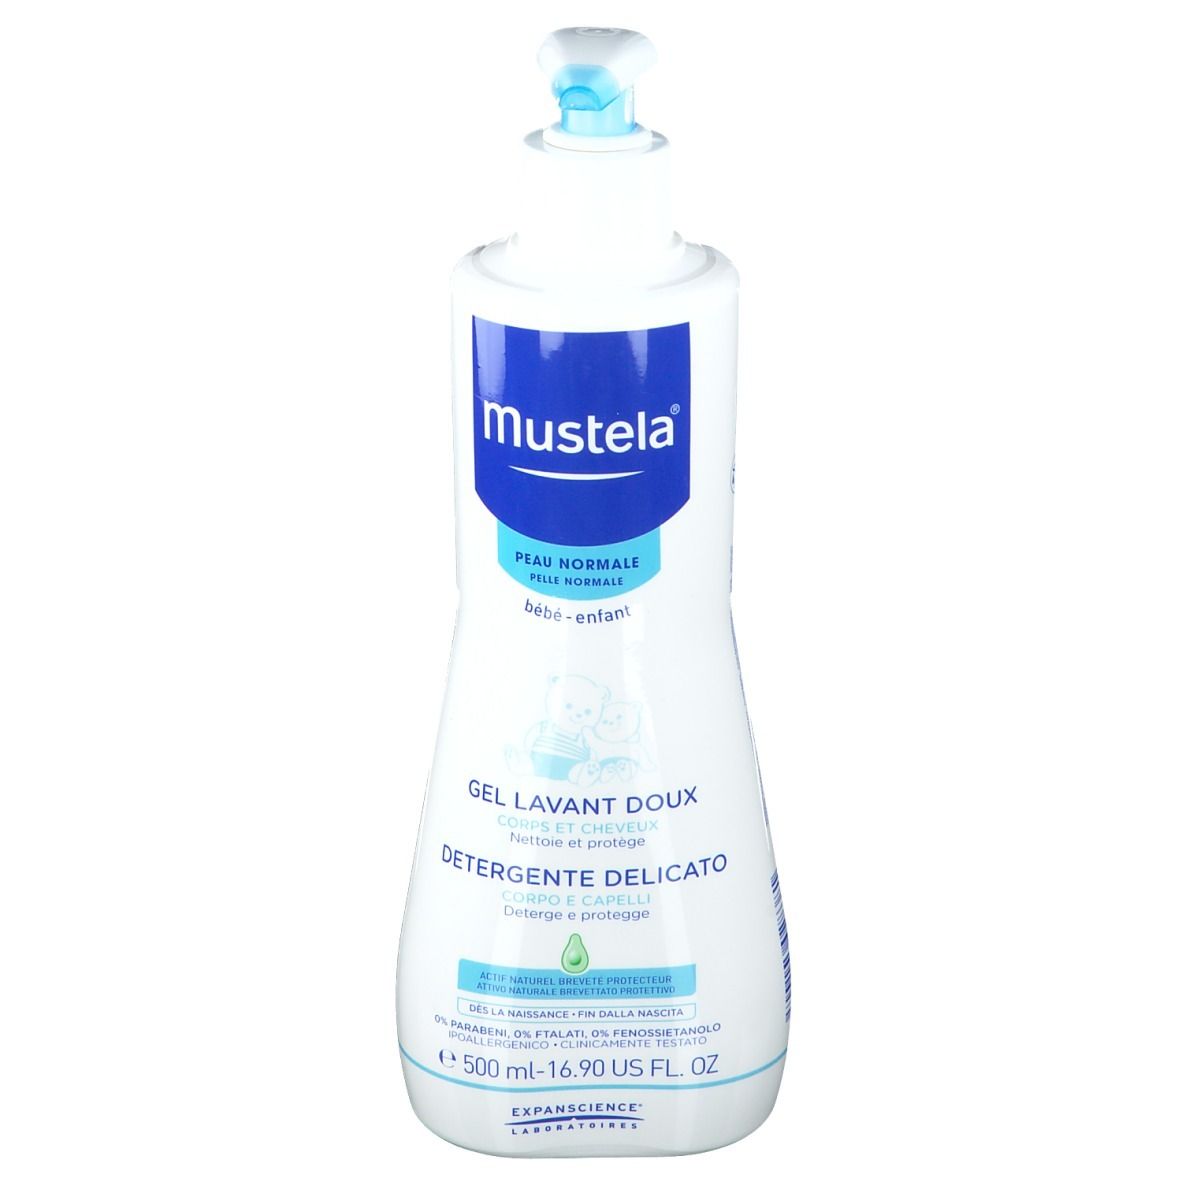 Mustela® Detergente Delicato